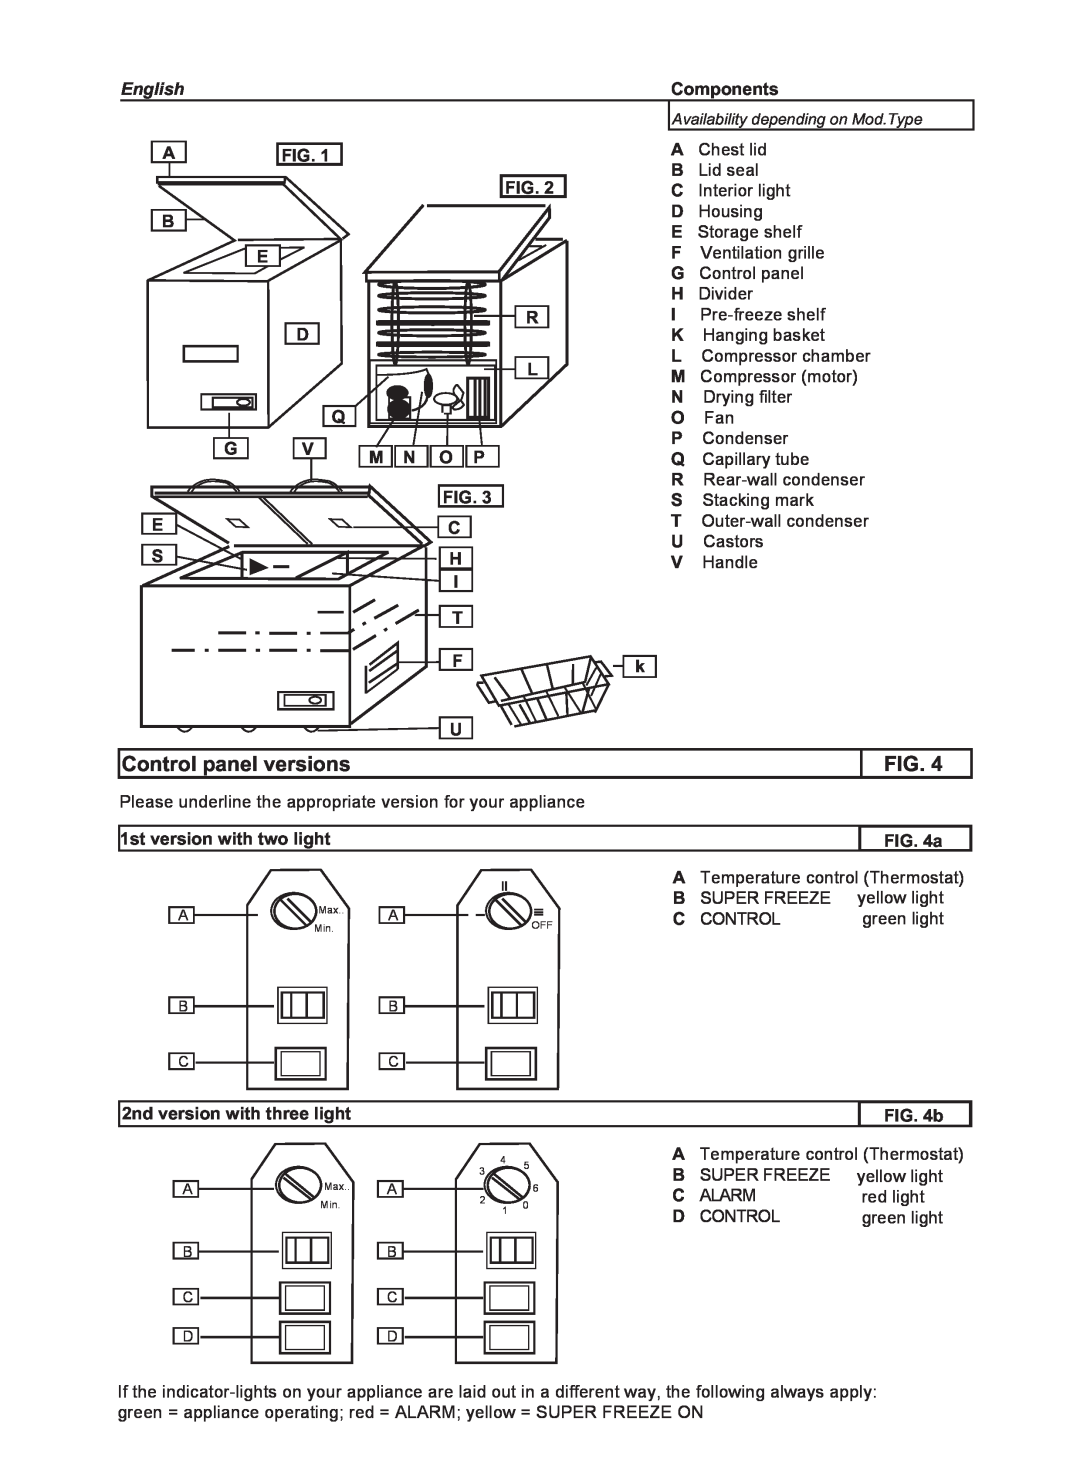 Haier BD-160G, BD-198E, BD-206G manual Control panel versions, English, Components 